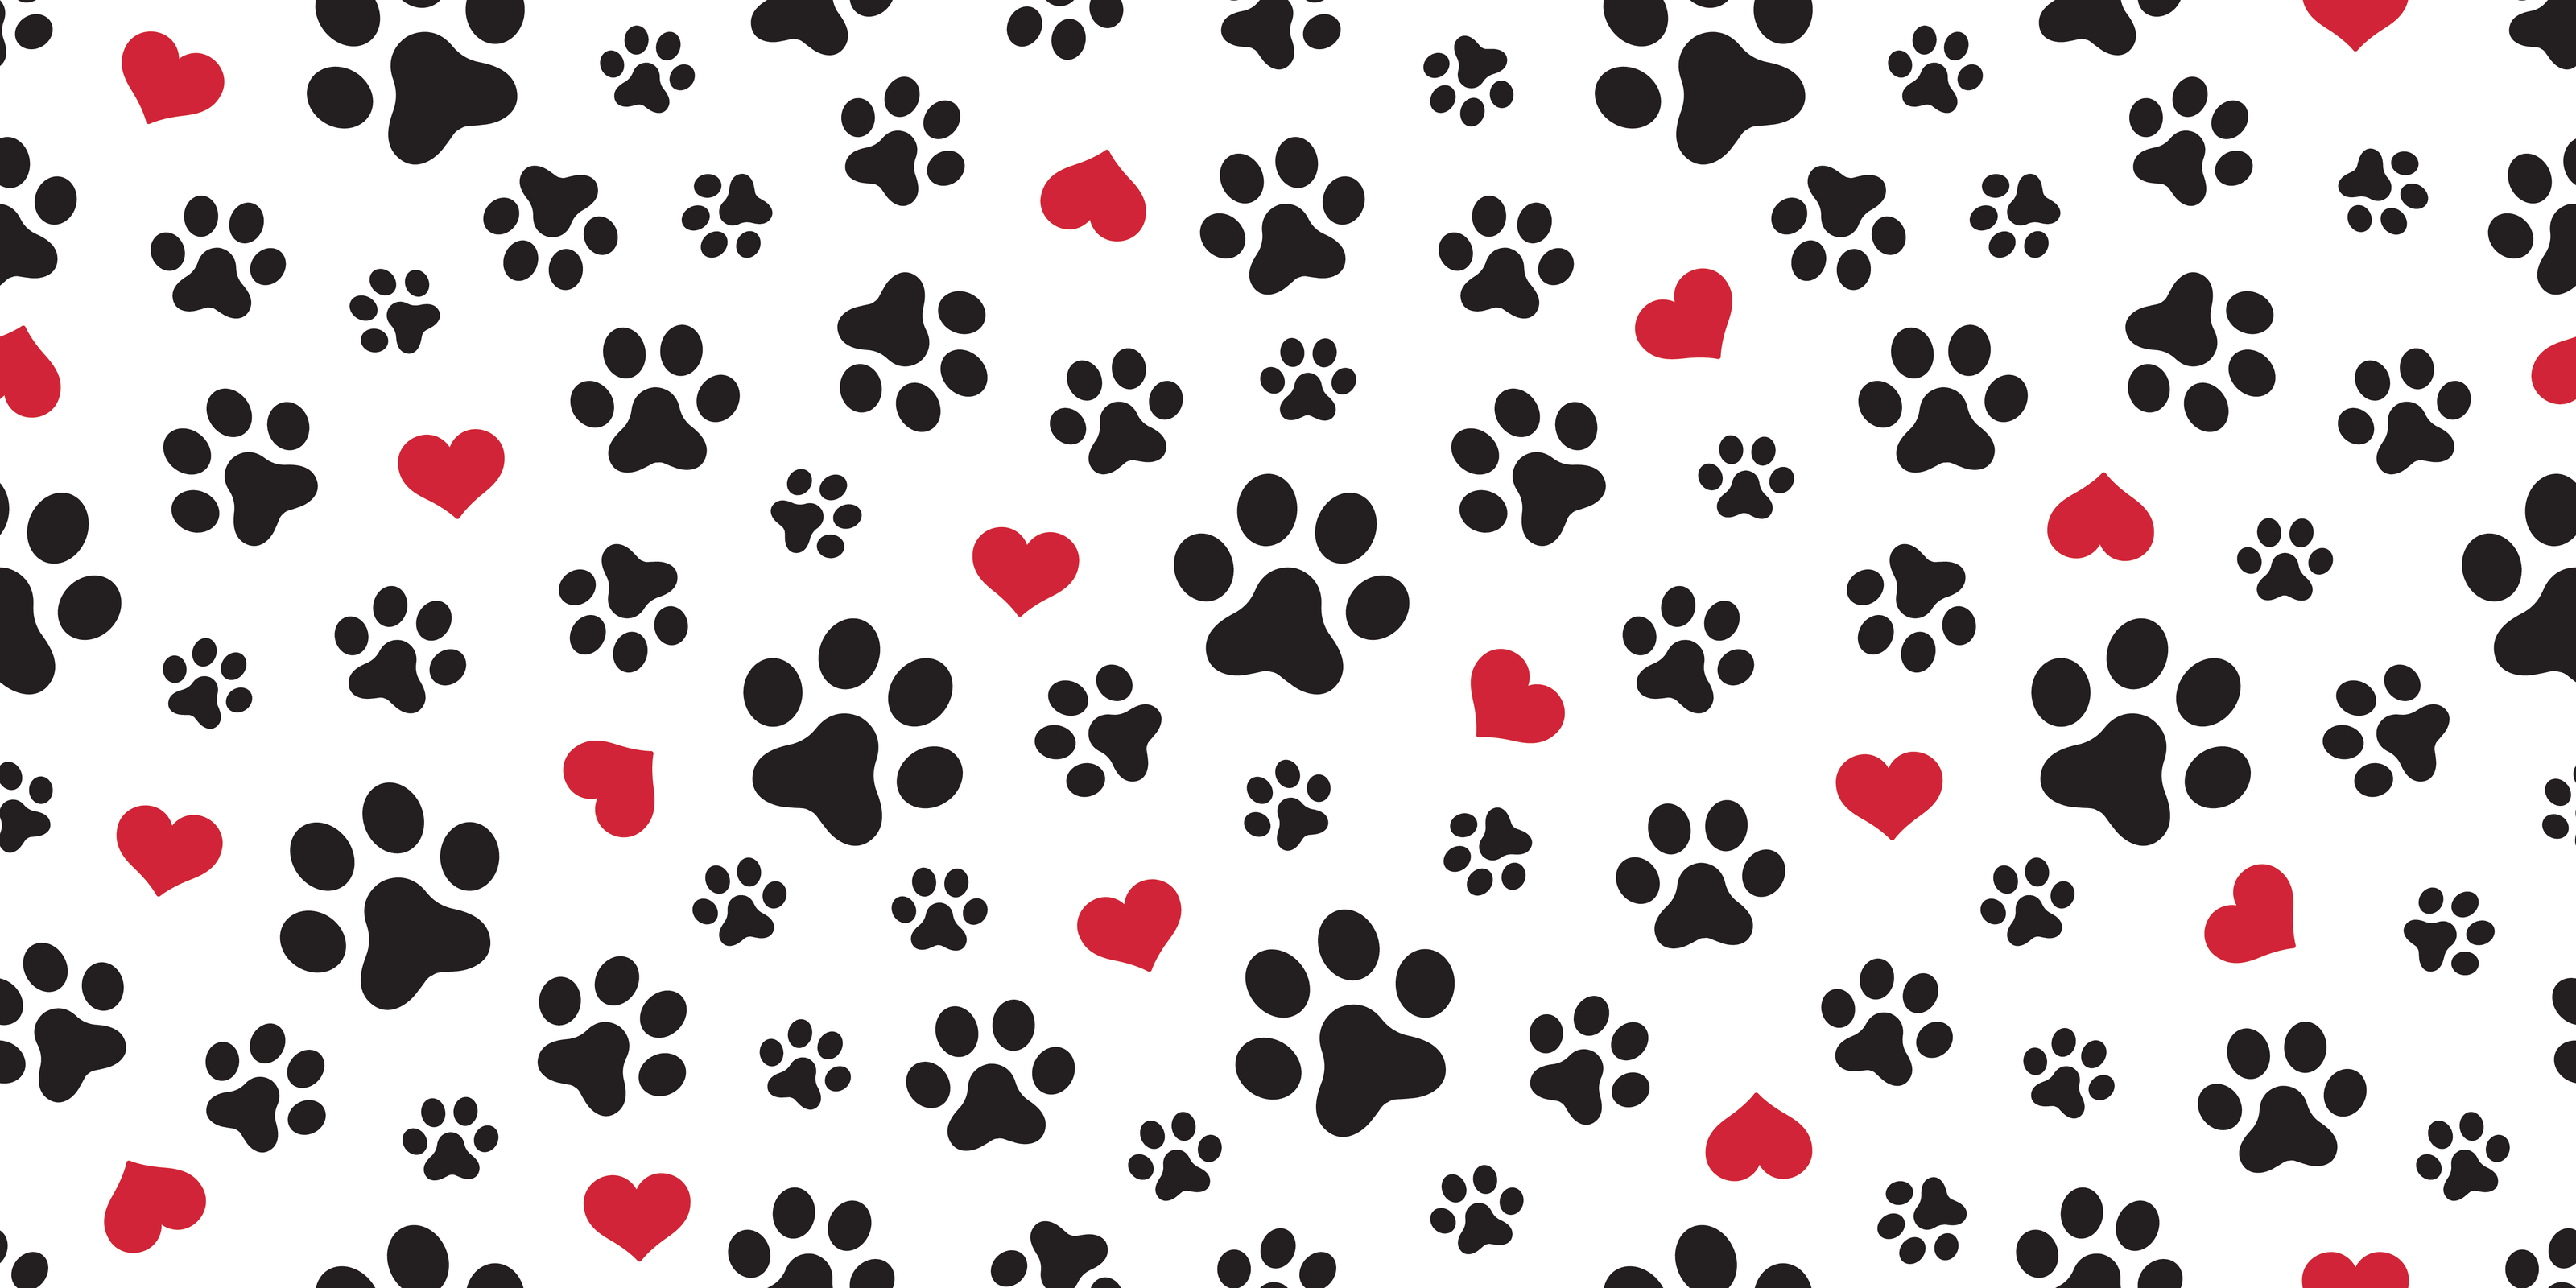 Dog Paw Print Love Wallpaper Mural Murals Your Way